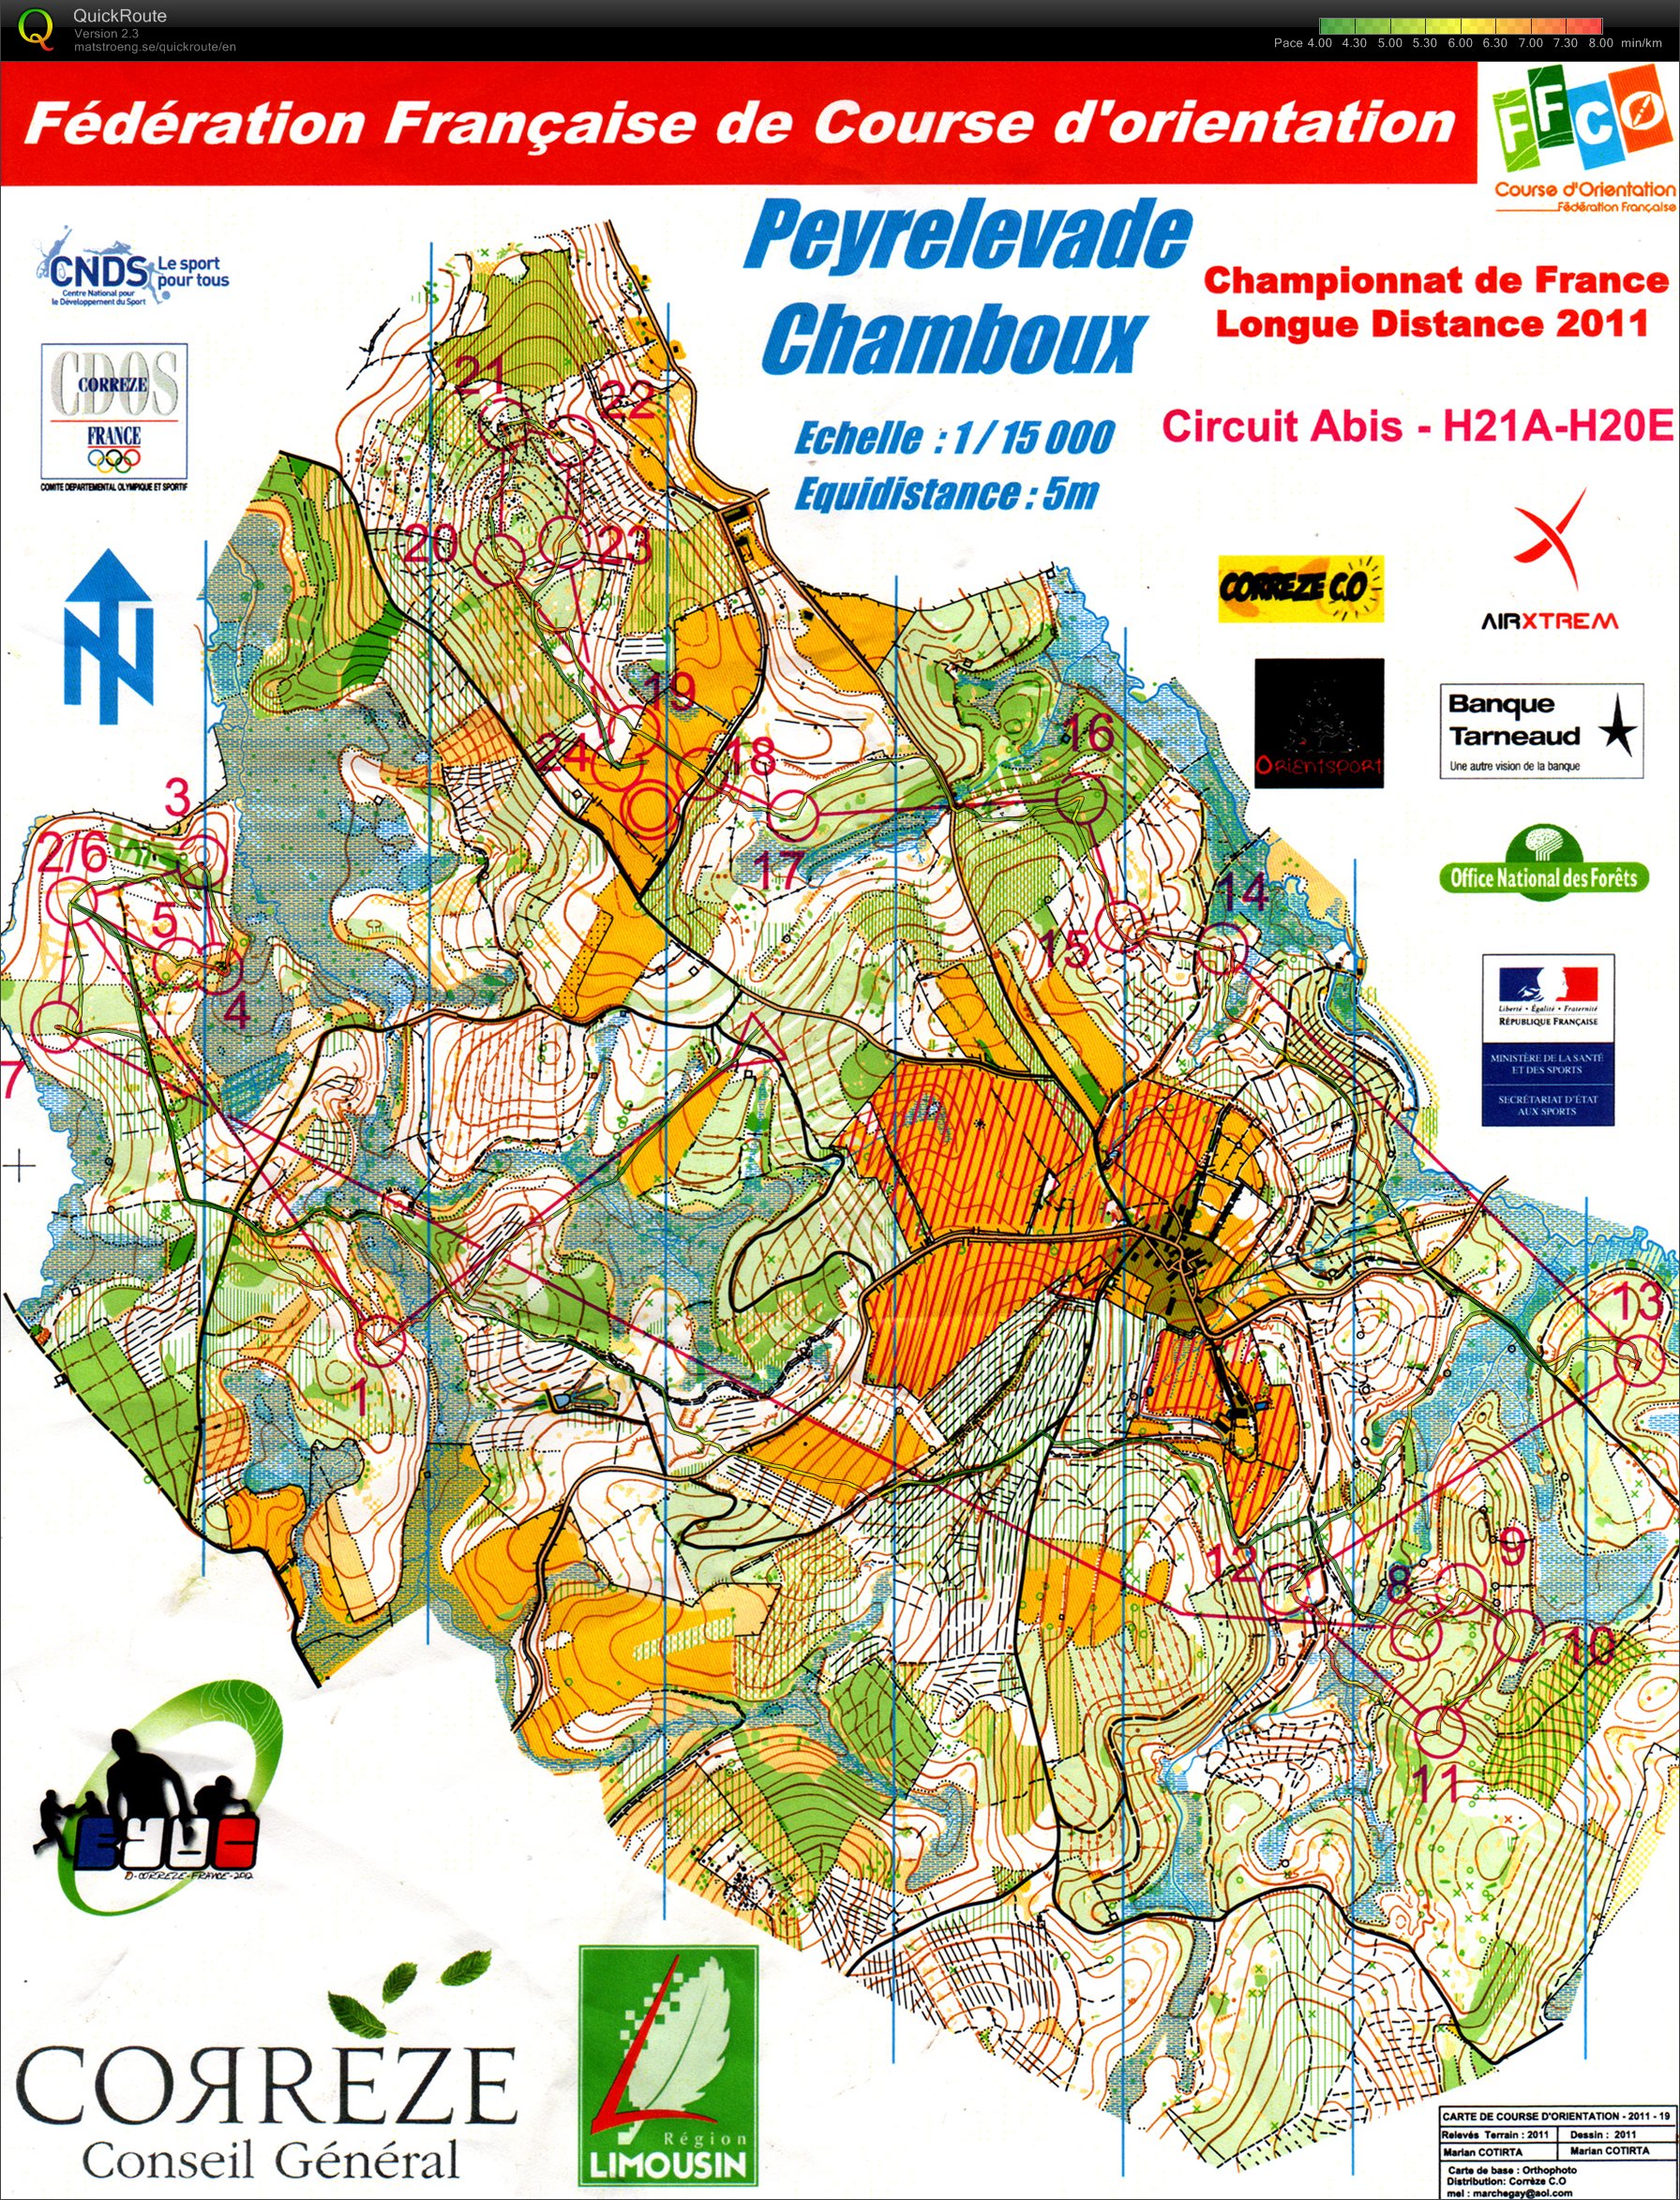 Championnats de France 2011 - LD (2011-07-16)